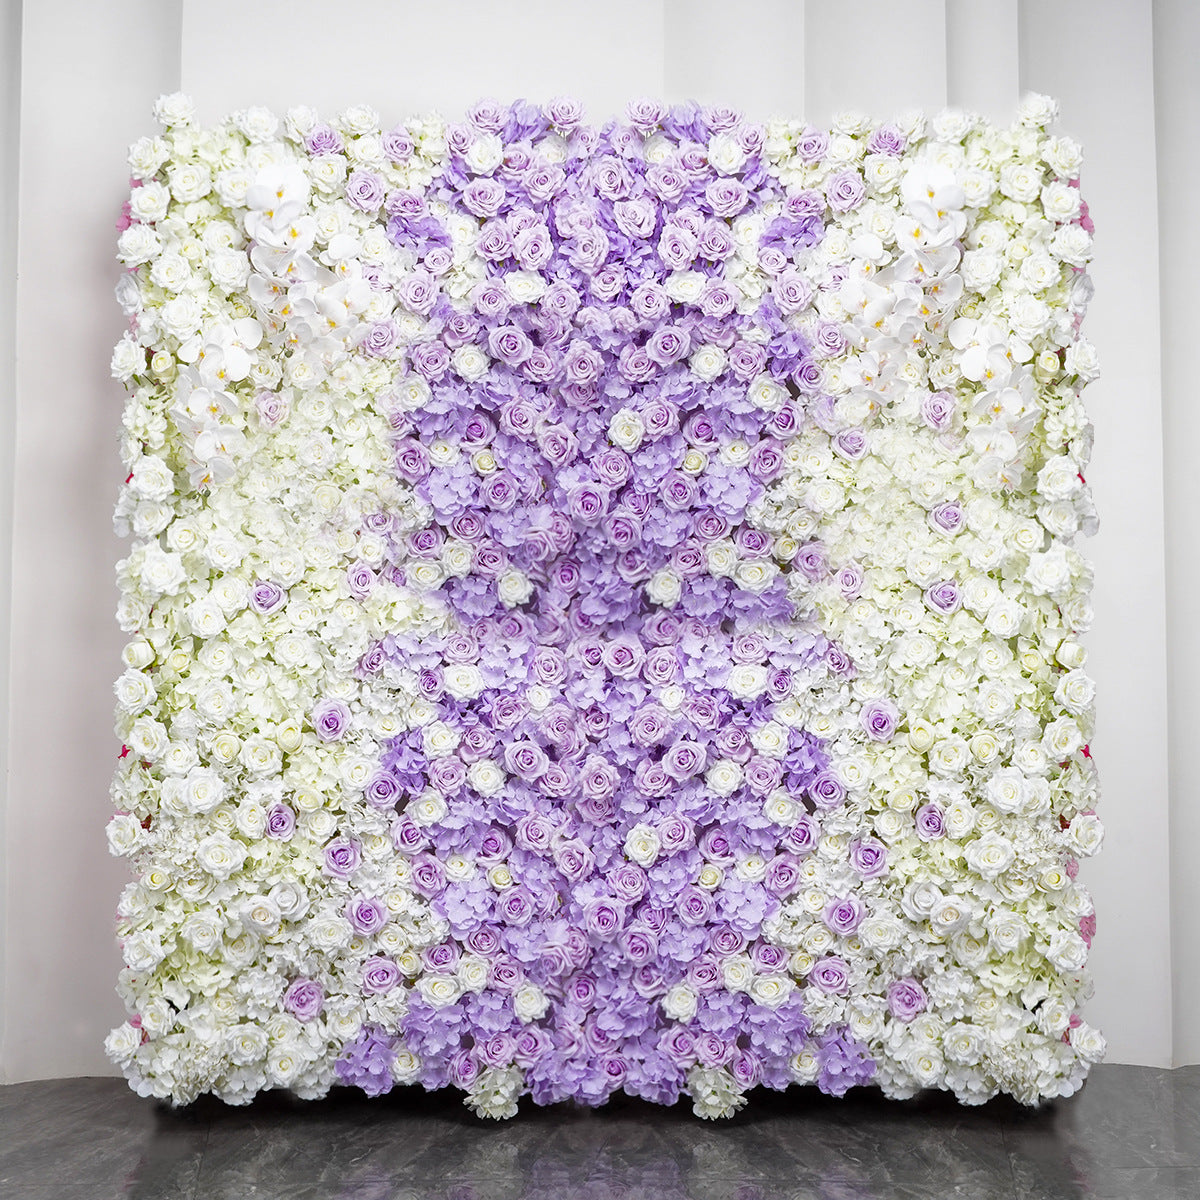 3D Artificial Flower Wall Arrangement Wedding Party Birthday Backdrop Decor HQ3924